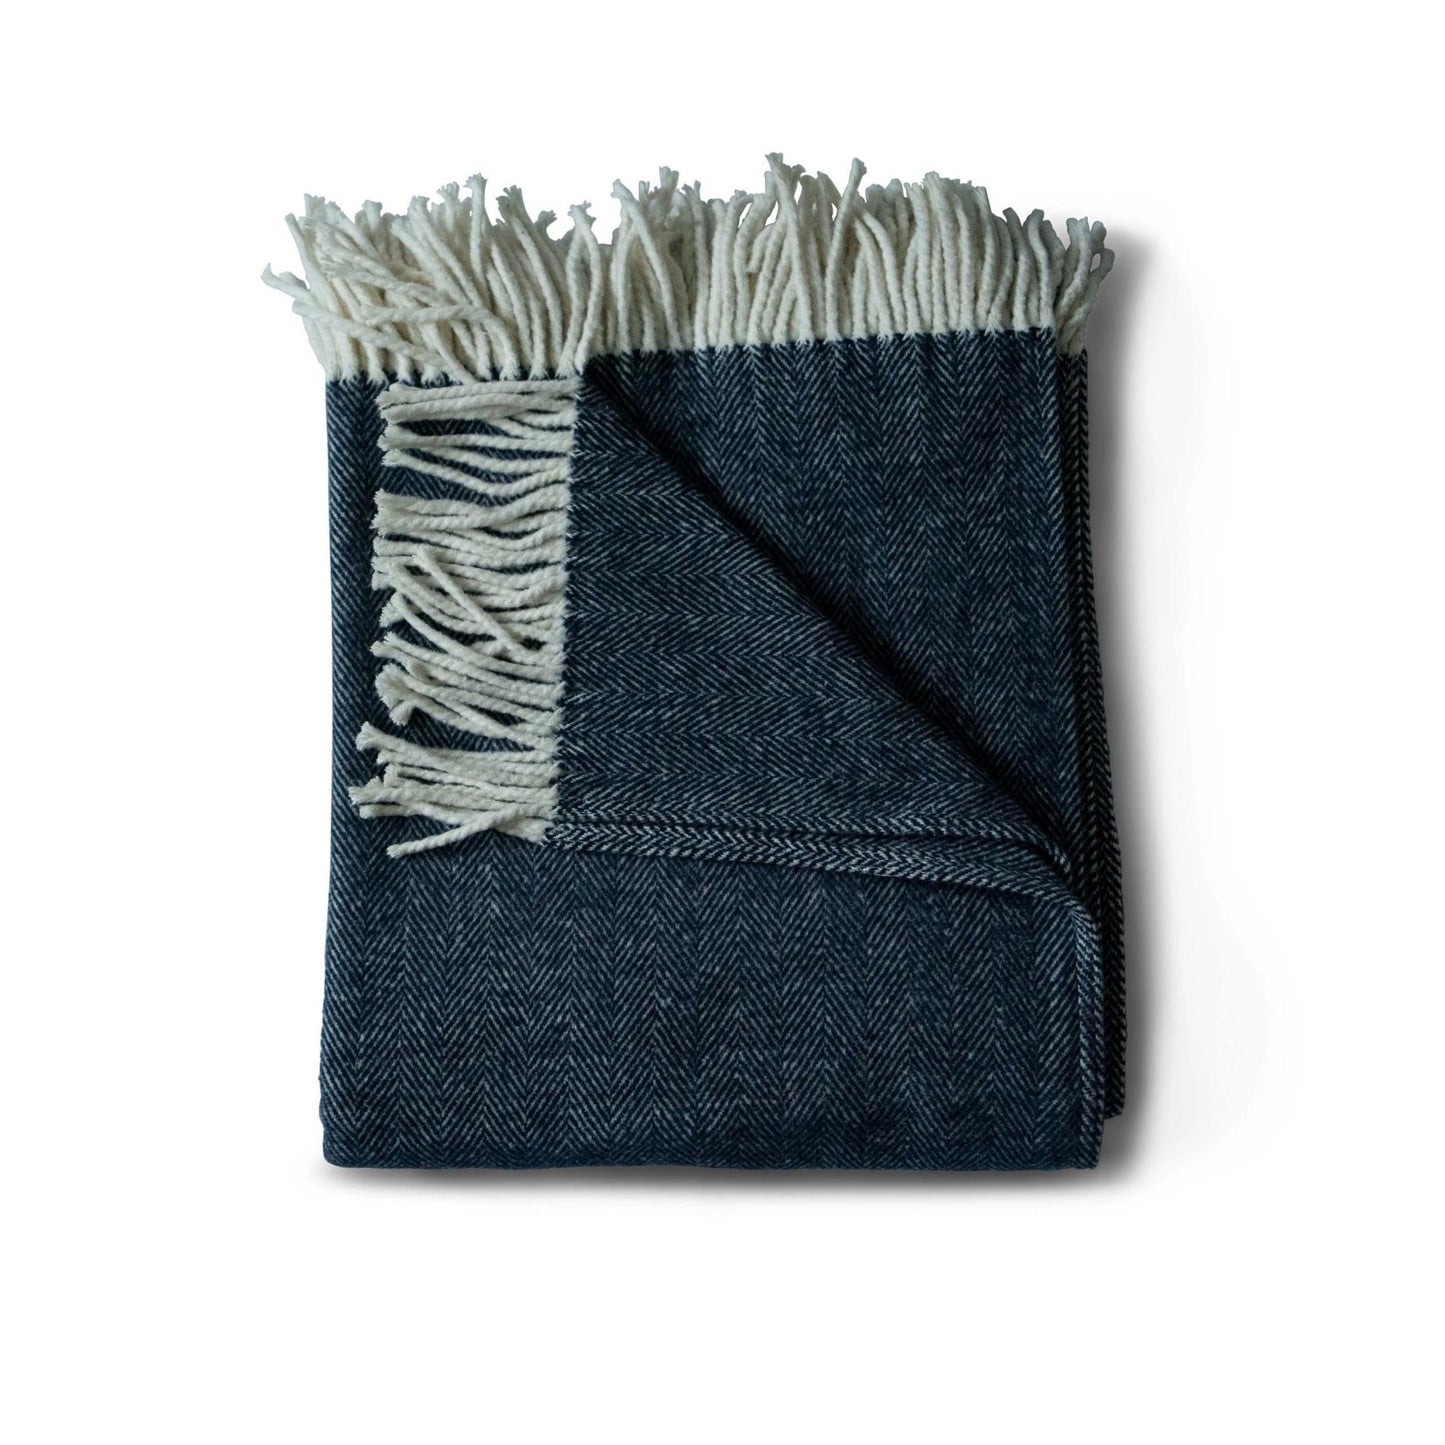 Brushed cotton throw blanket in dark navy blue herringbone pattern with cotton fringe  